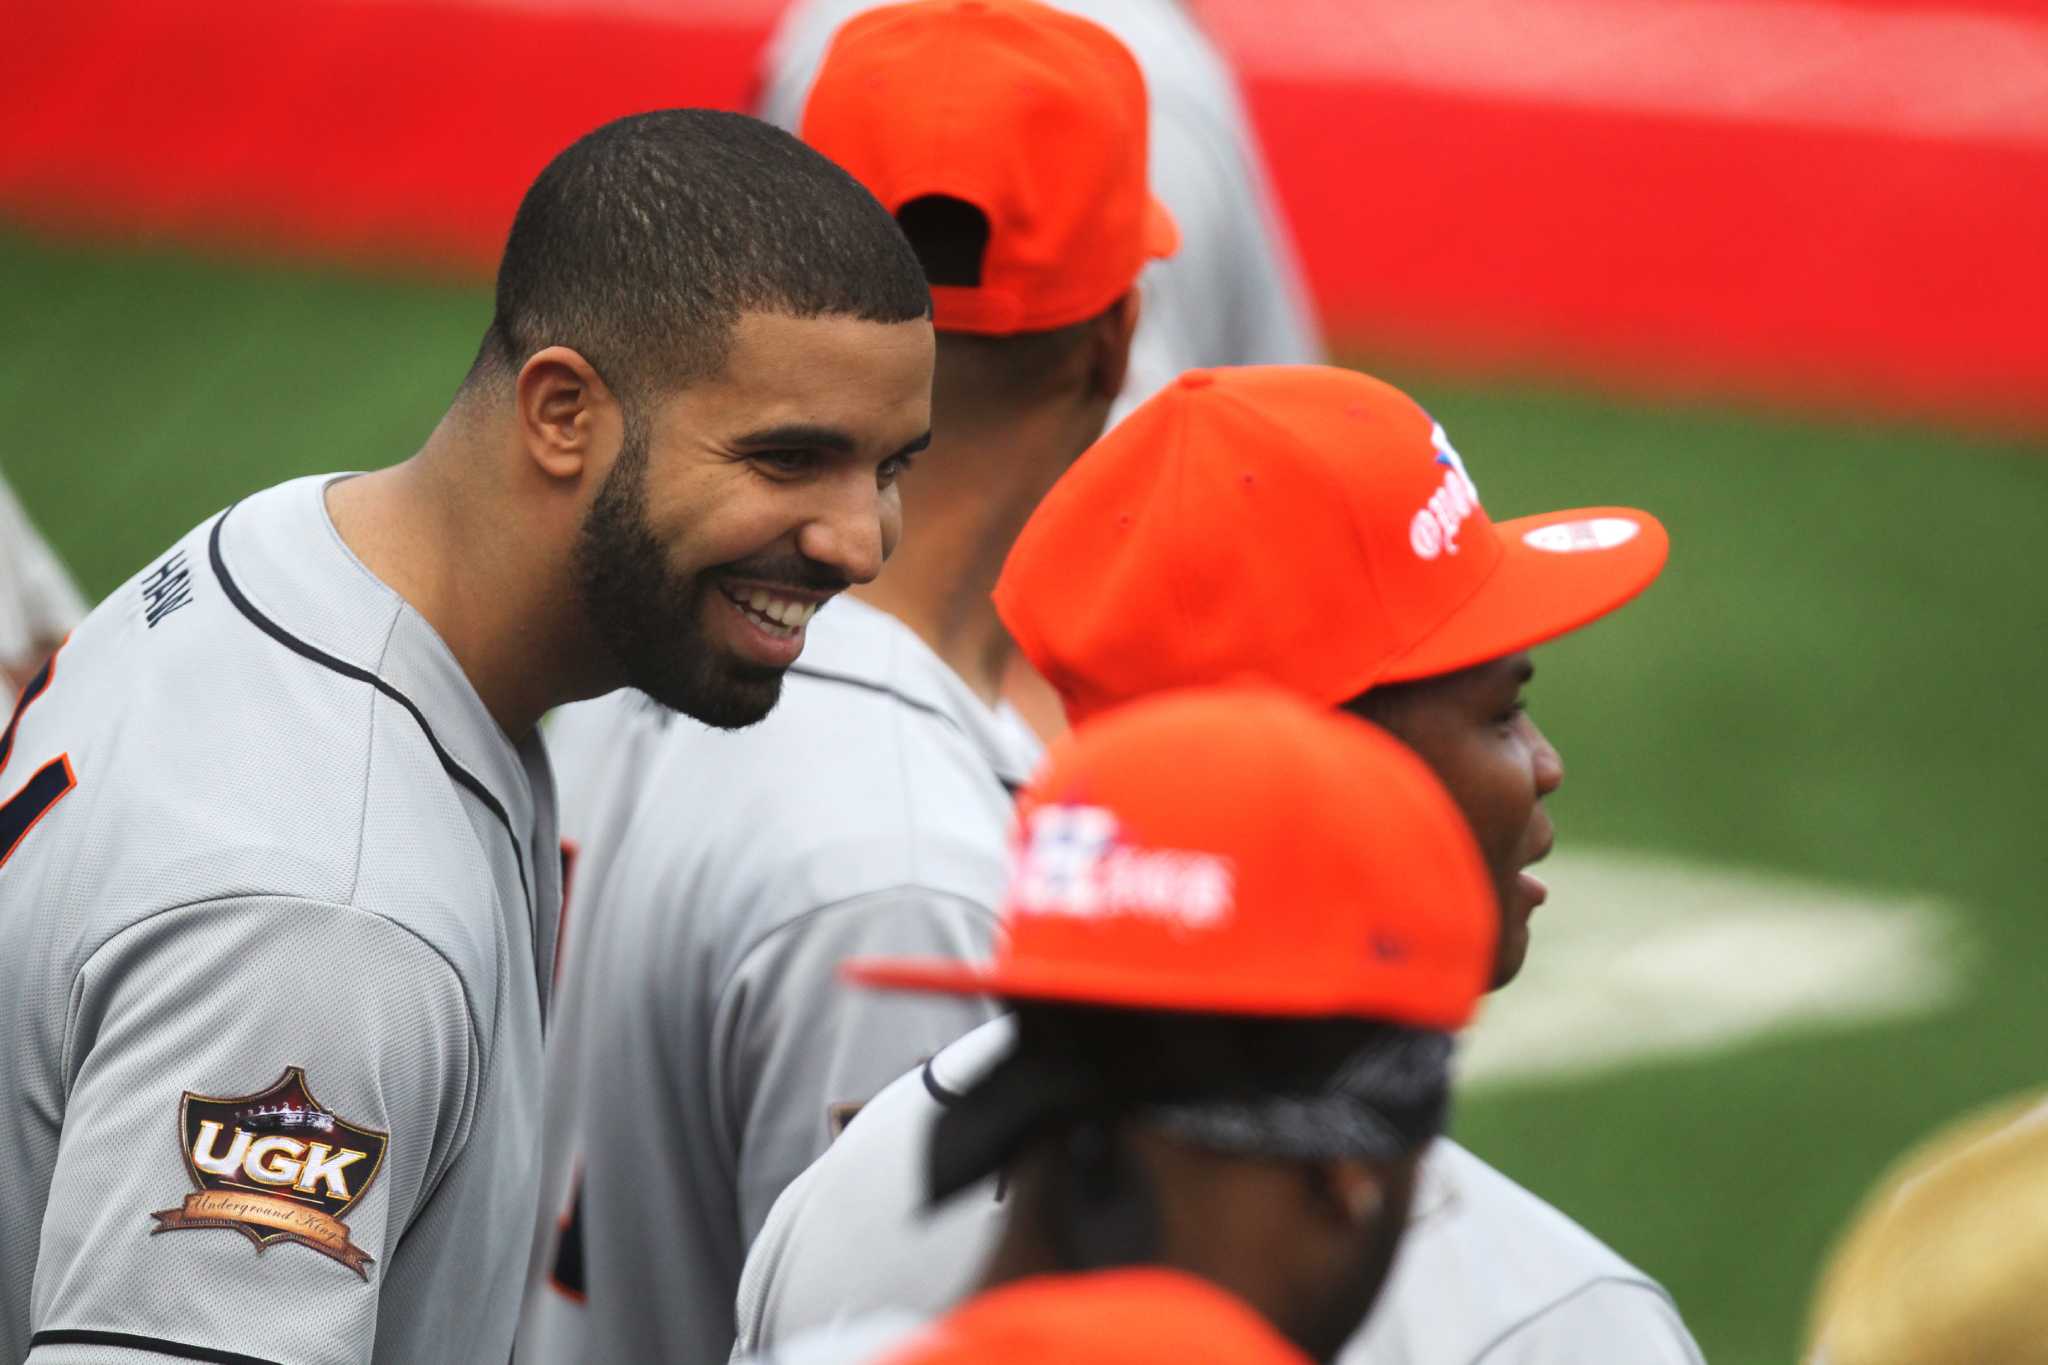 Drake releases event rundown of Houston Appreciation Week